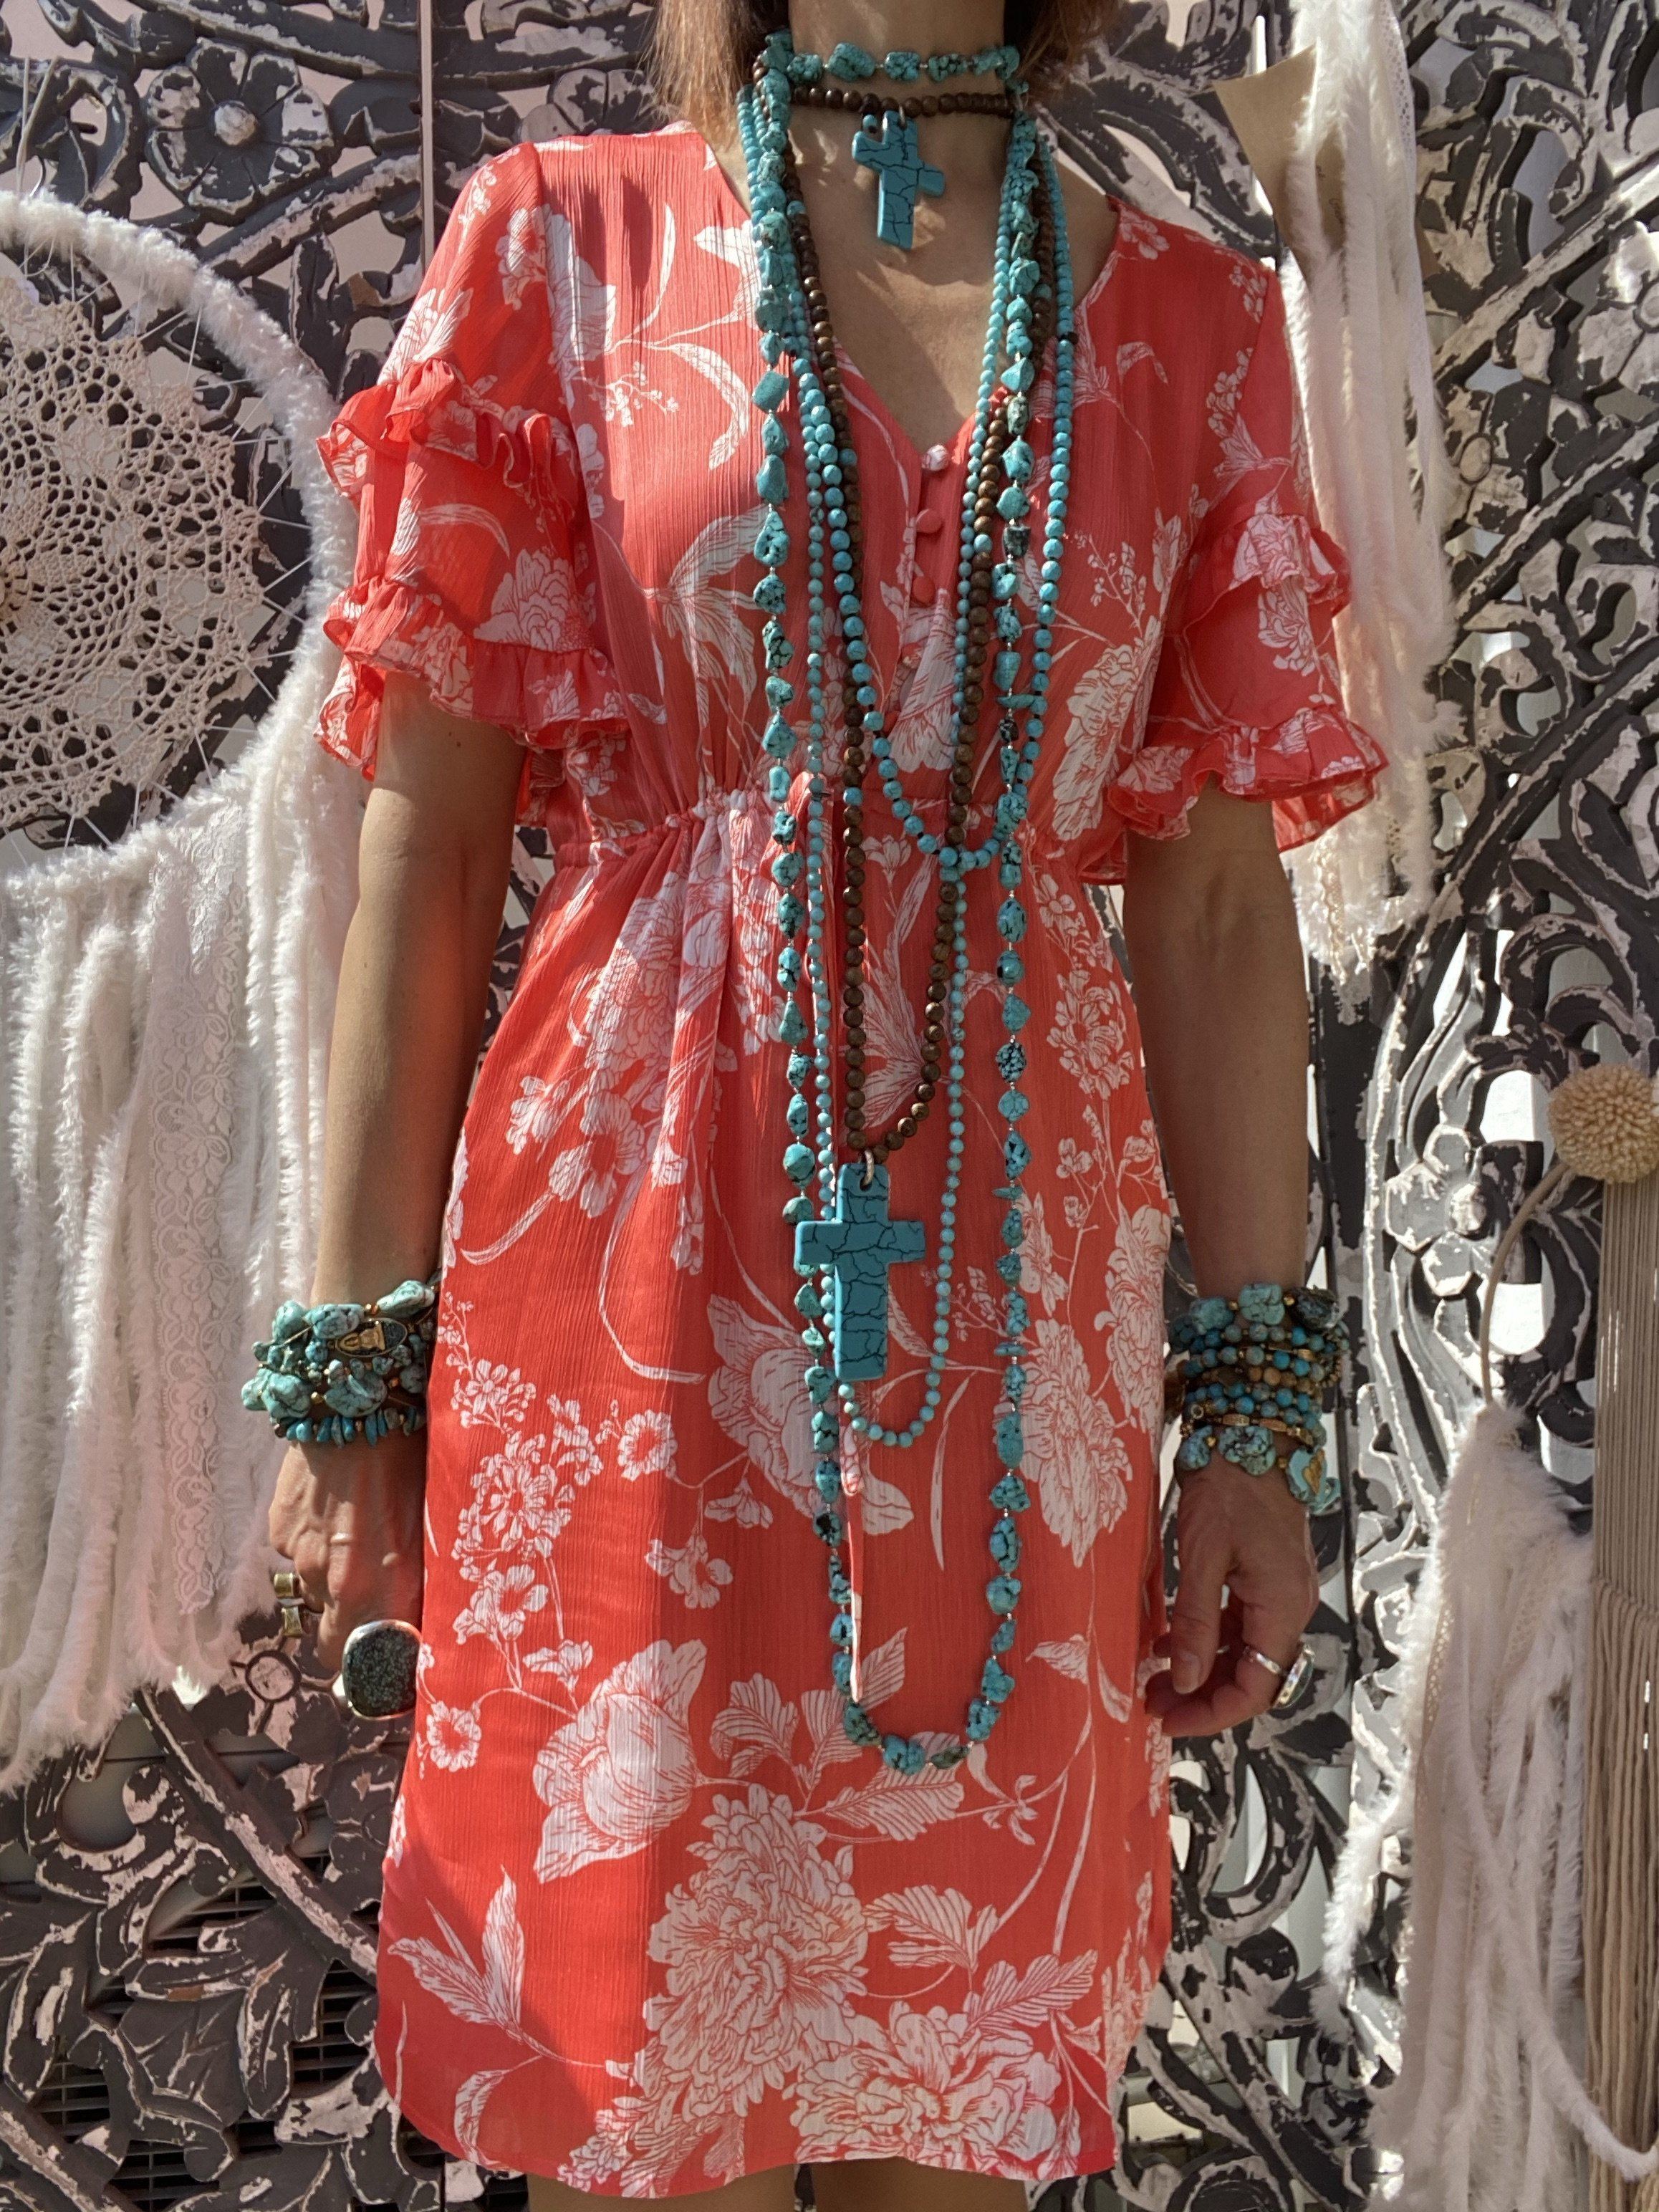 Ohana Coral Wild dress by Amenapih